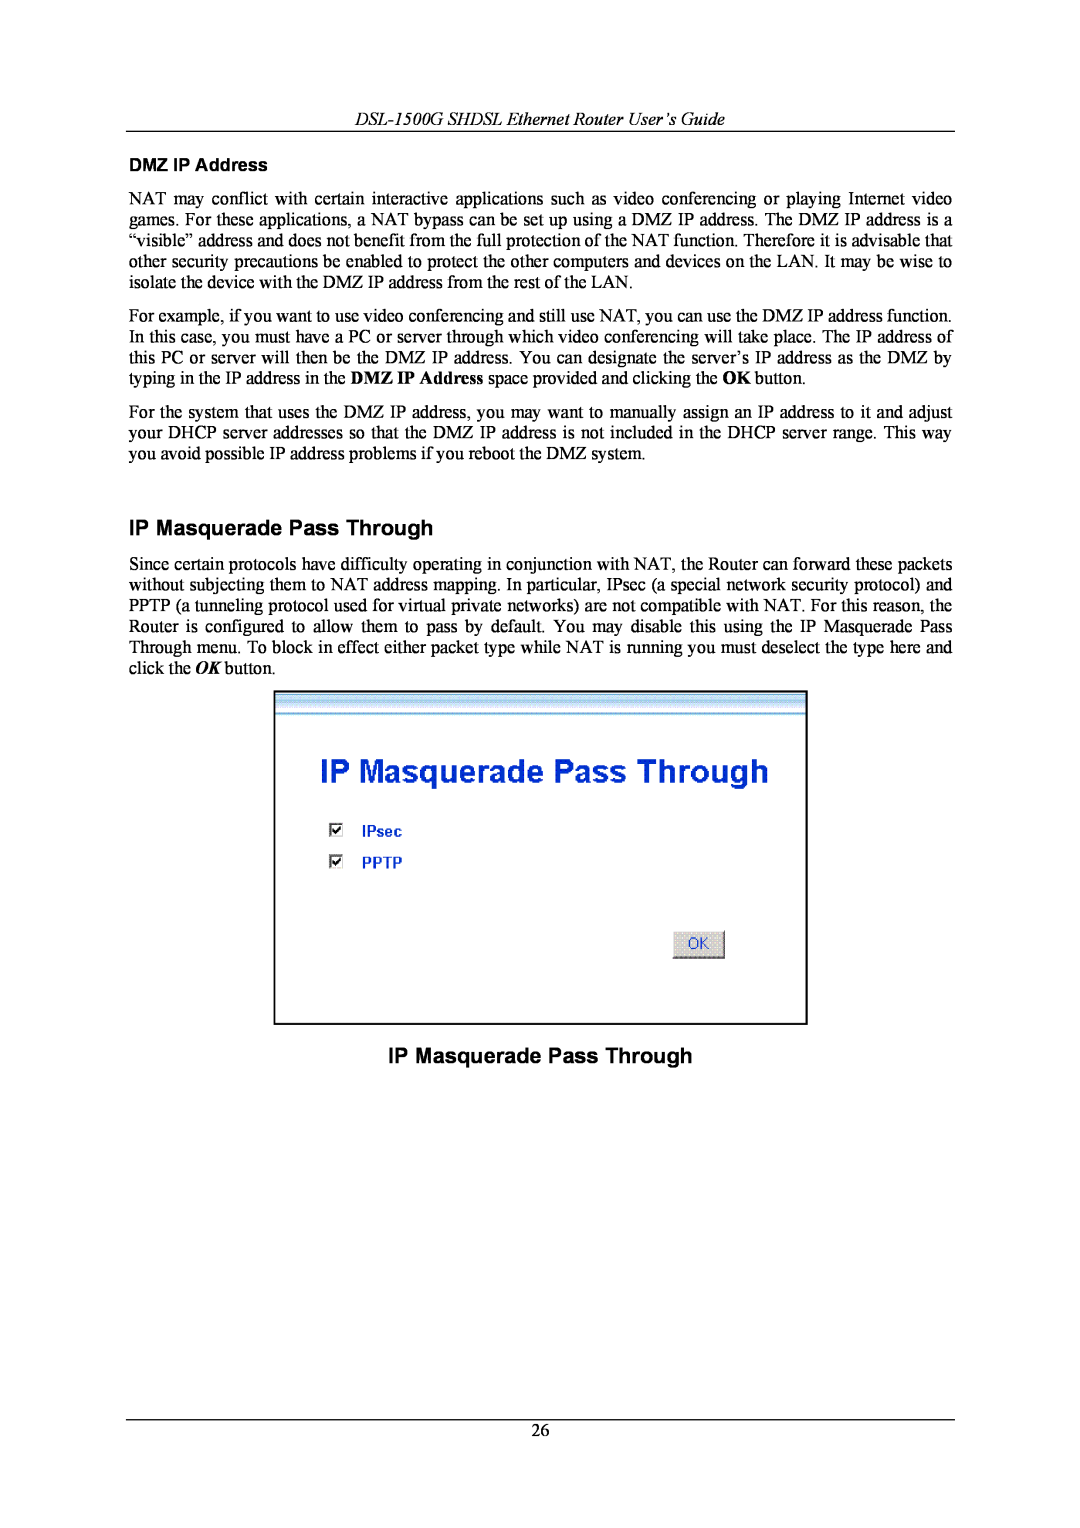 D-Link manual IP Masquerade Pass Through, DSL-1500G SHDSL Ethernet Router User’s Guide 